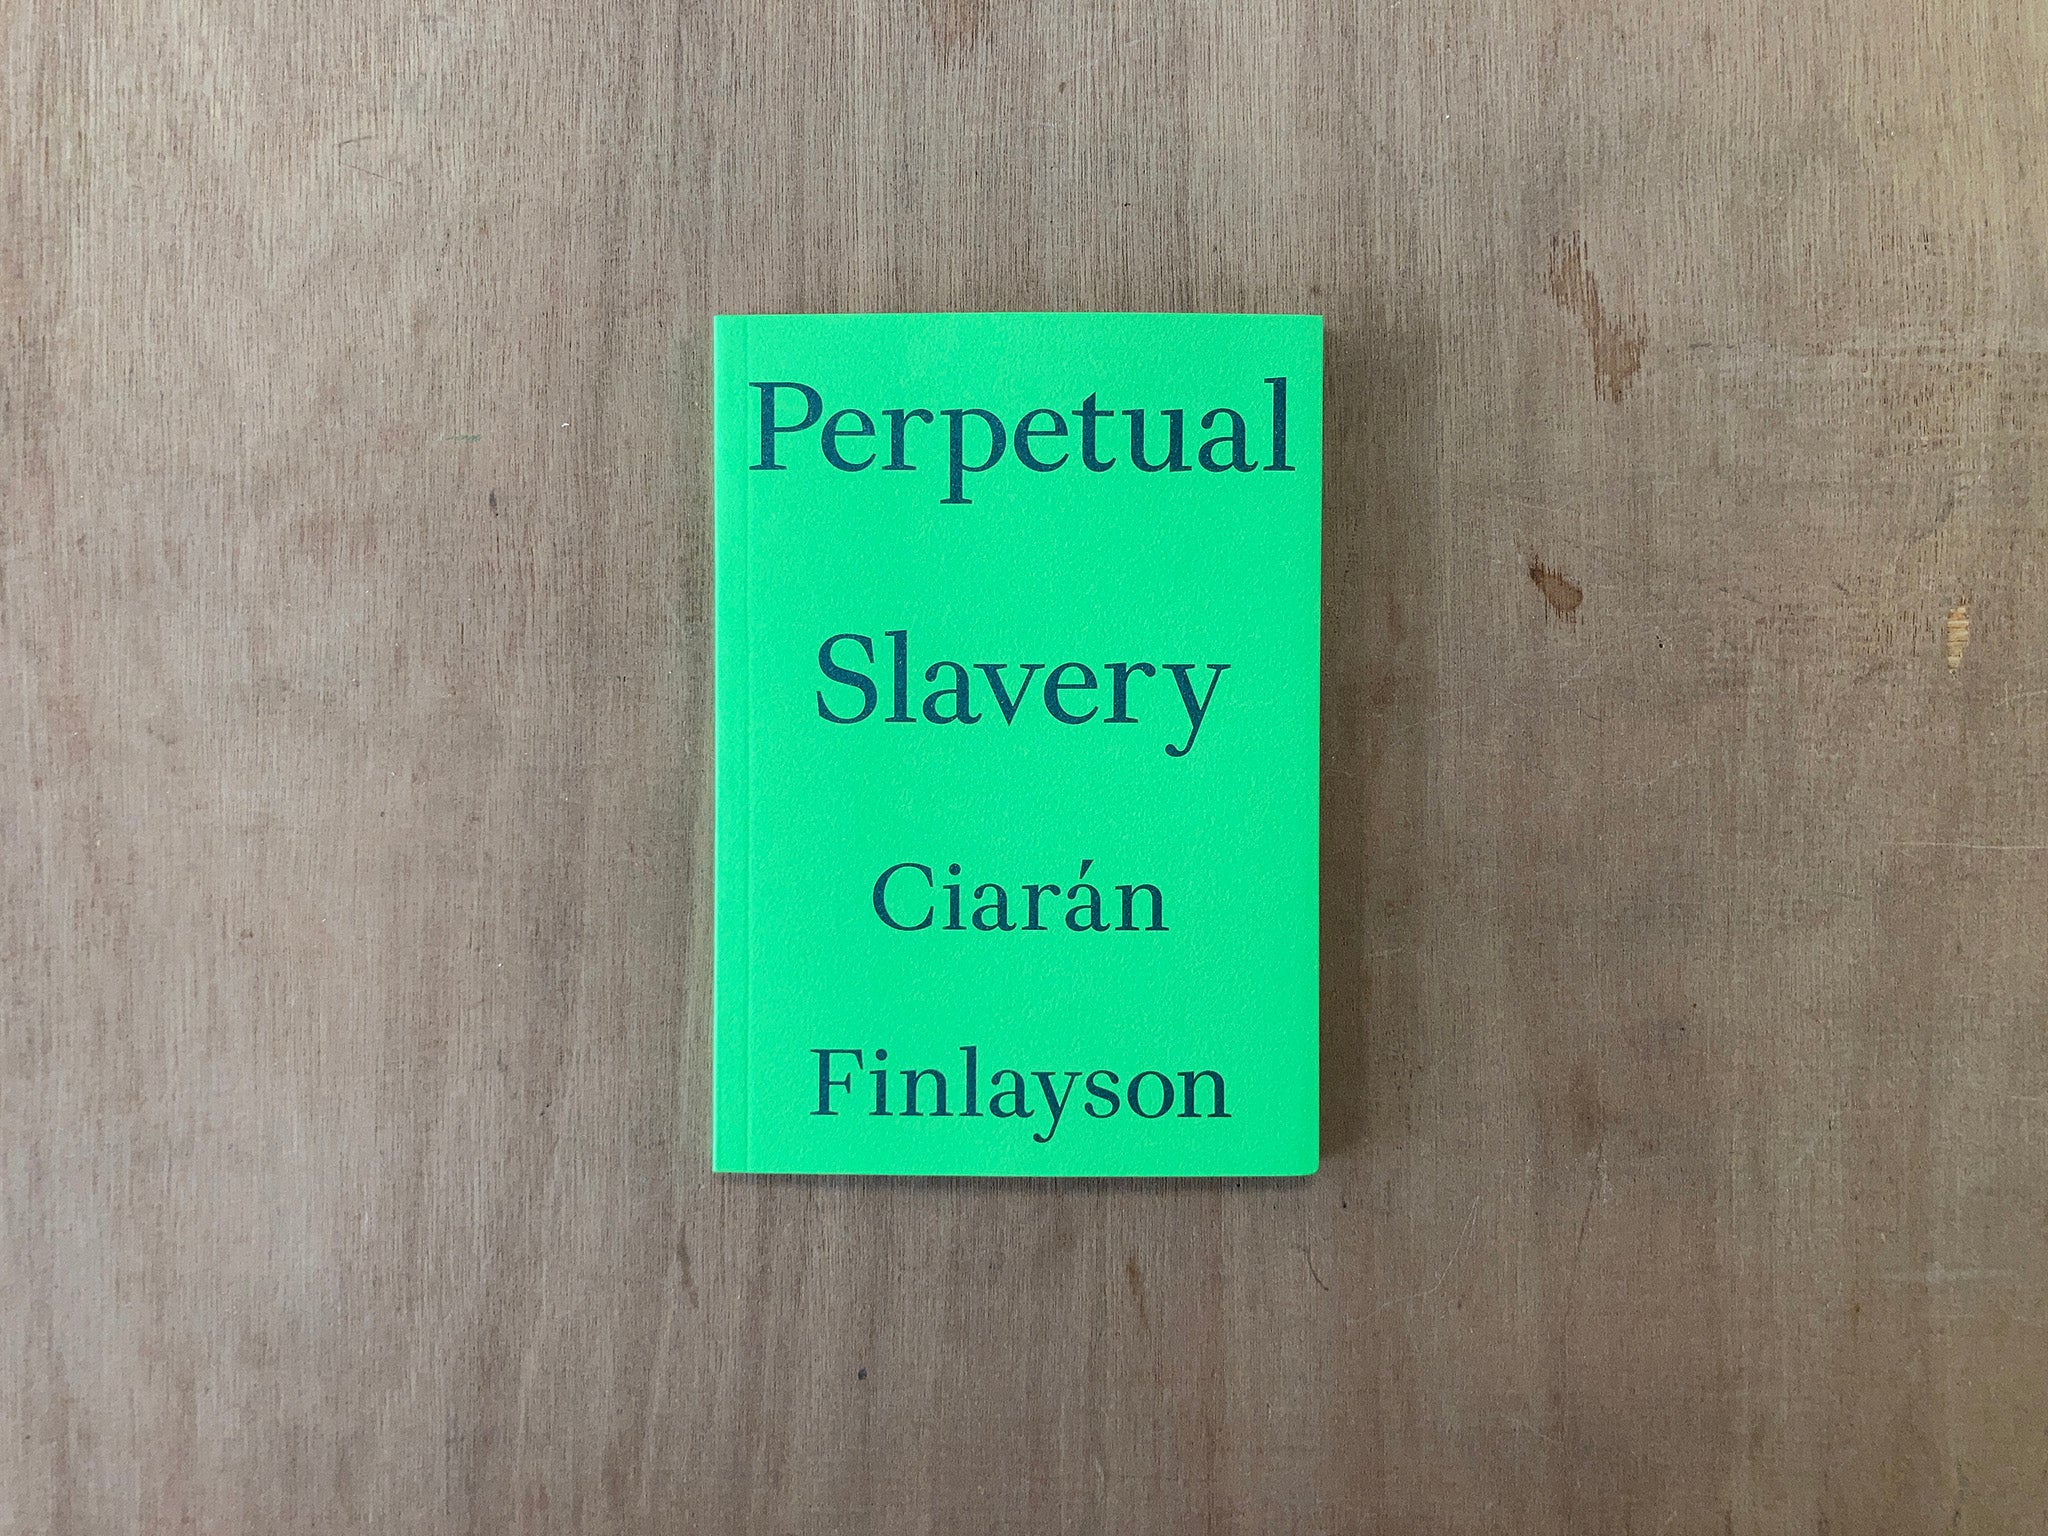 PERPETUAL SLAVERY by Ciarán Finlayson